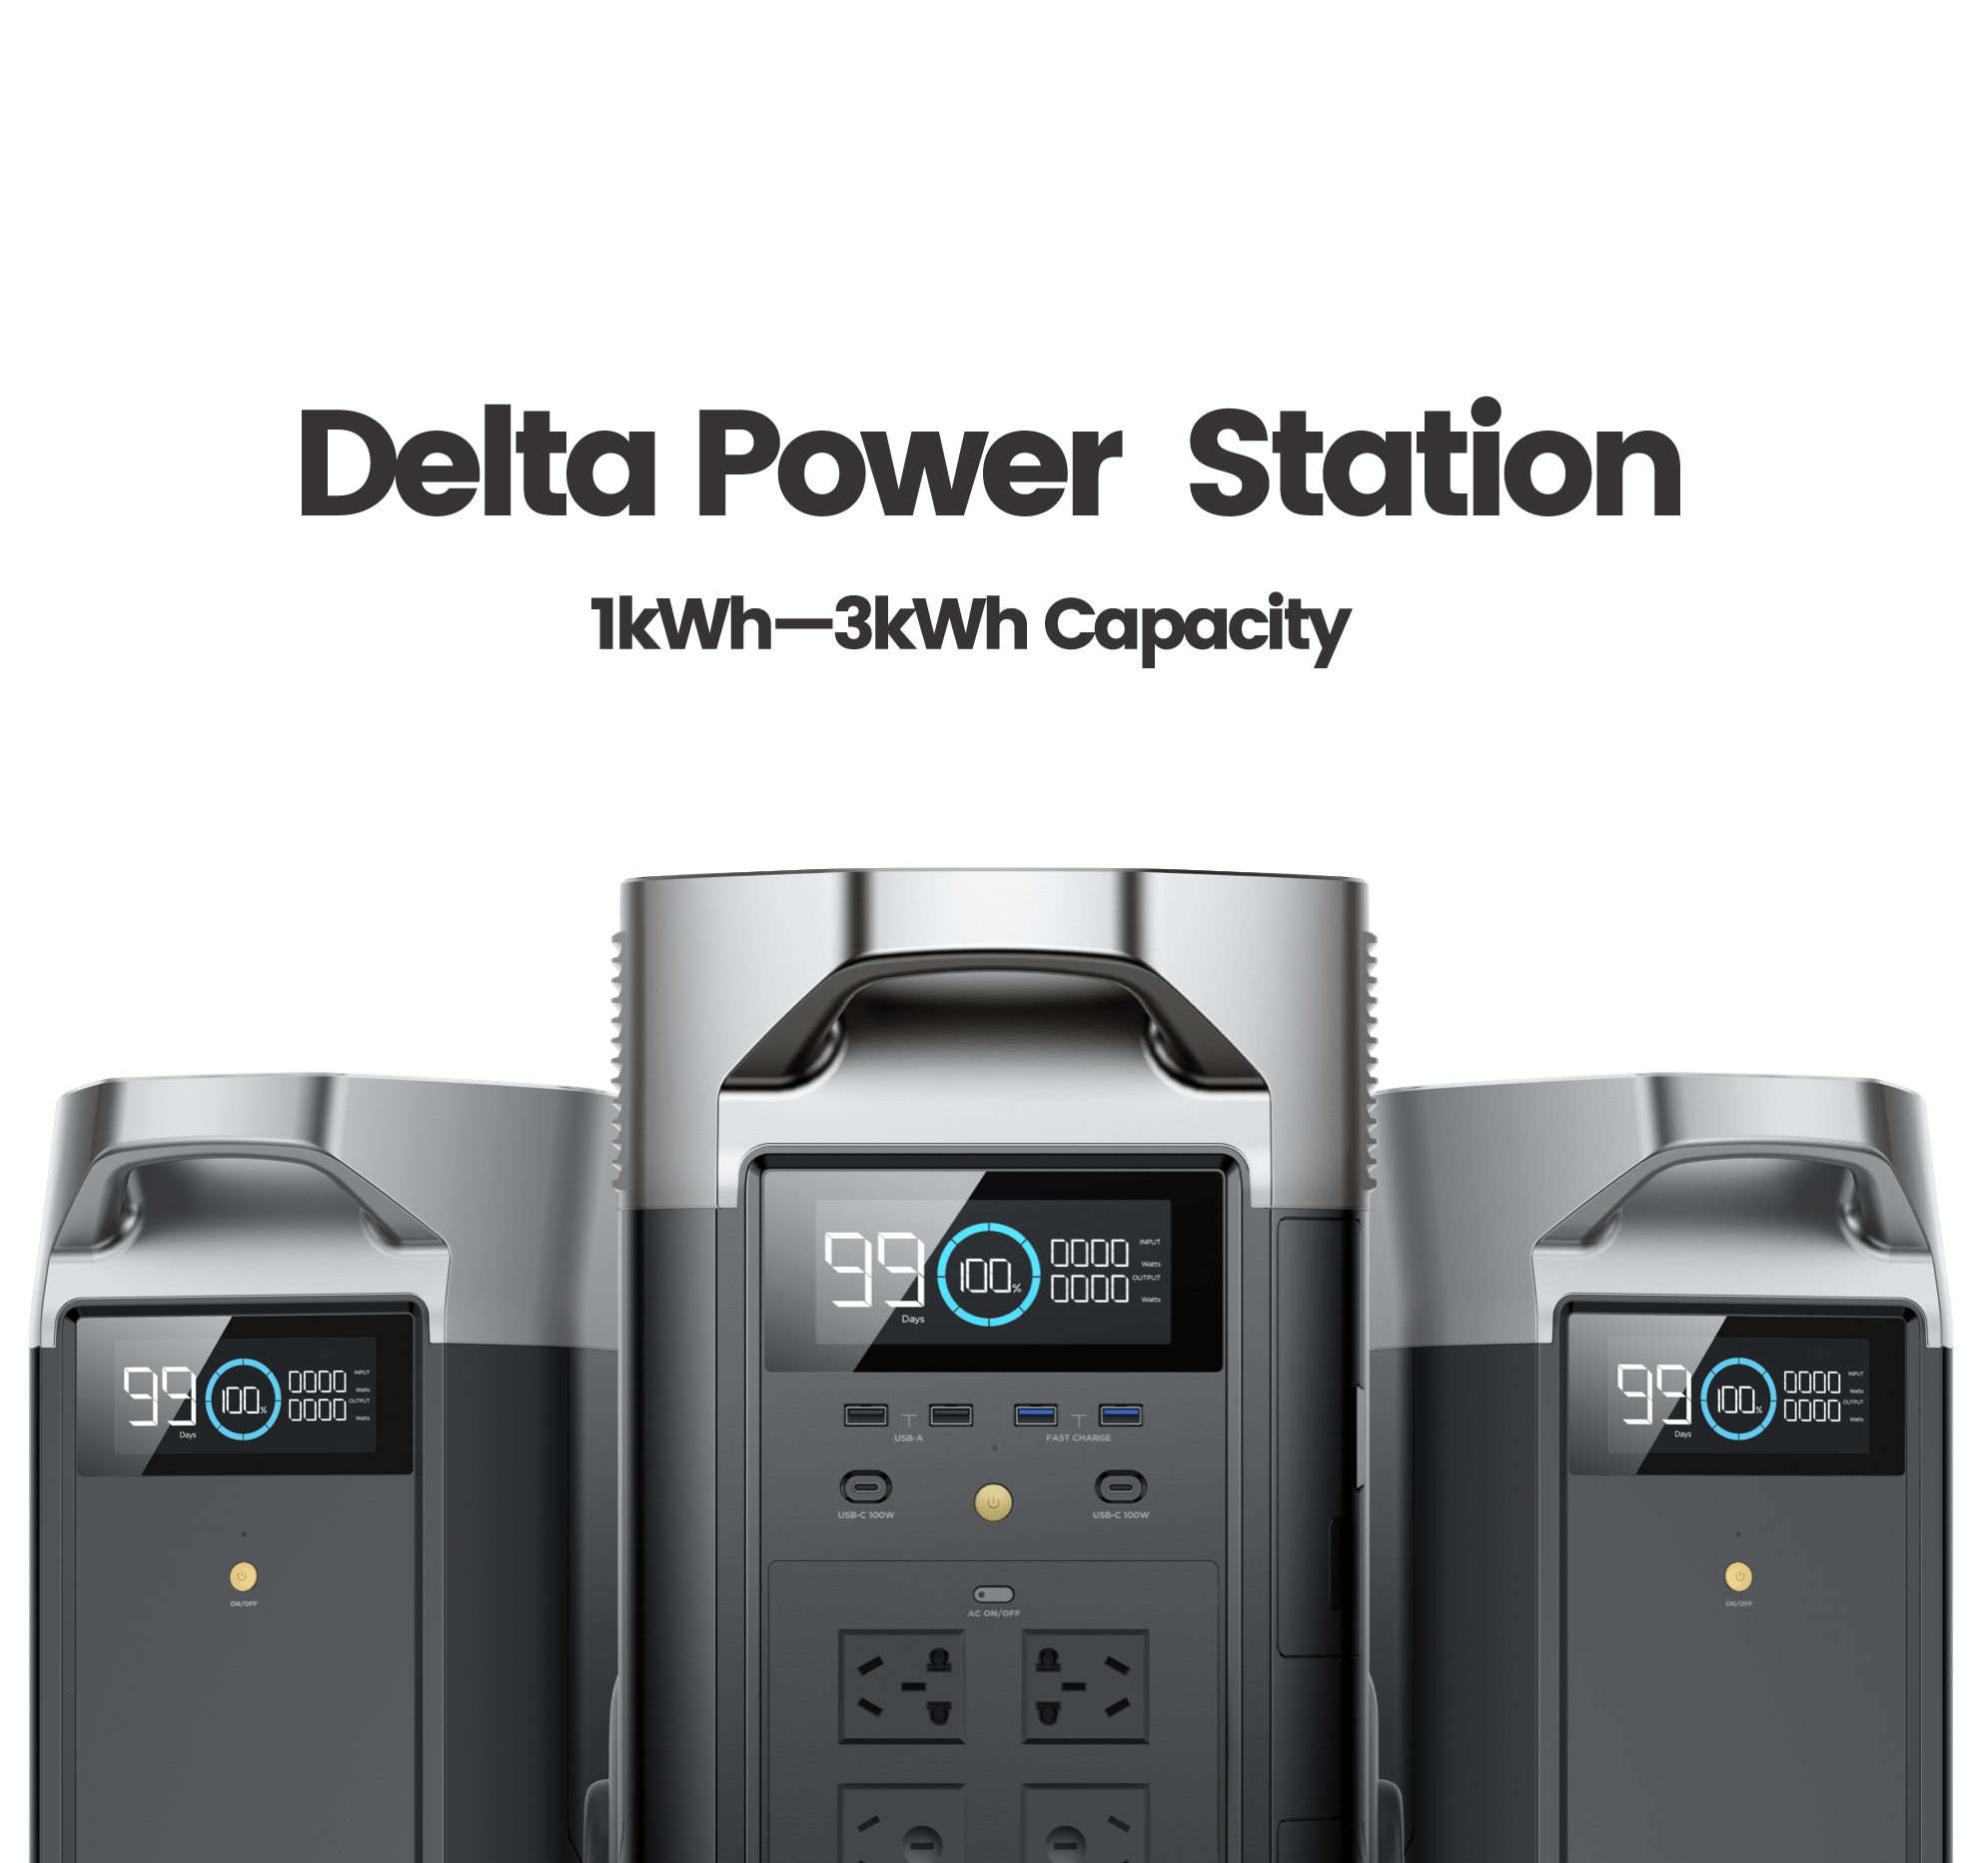 Delta Power Station